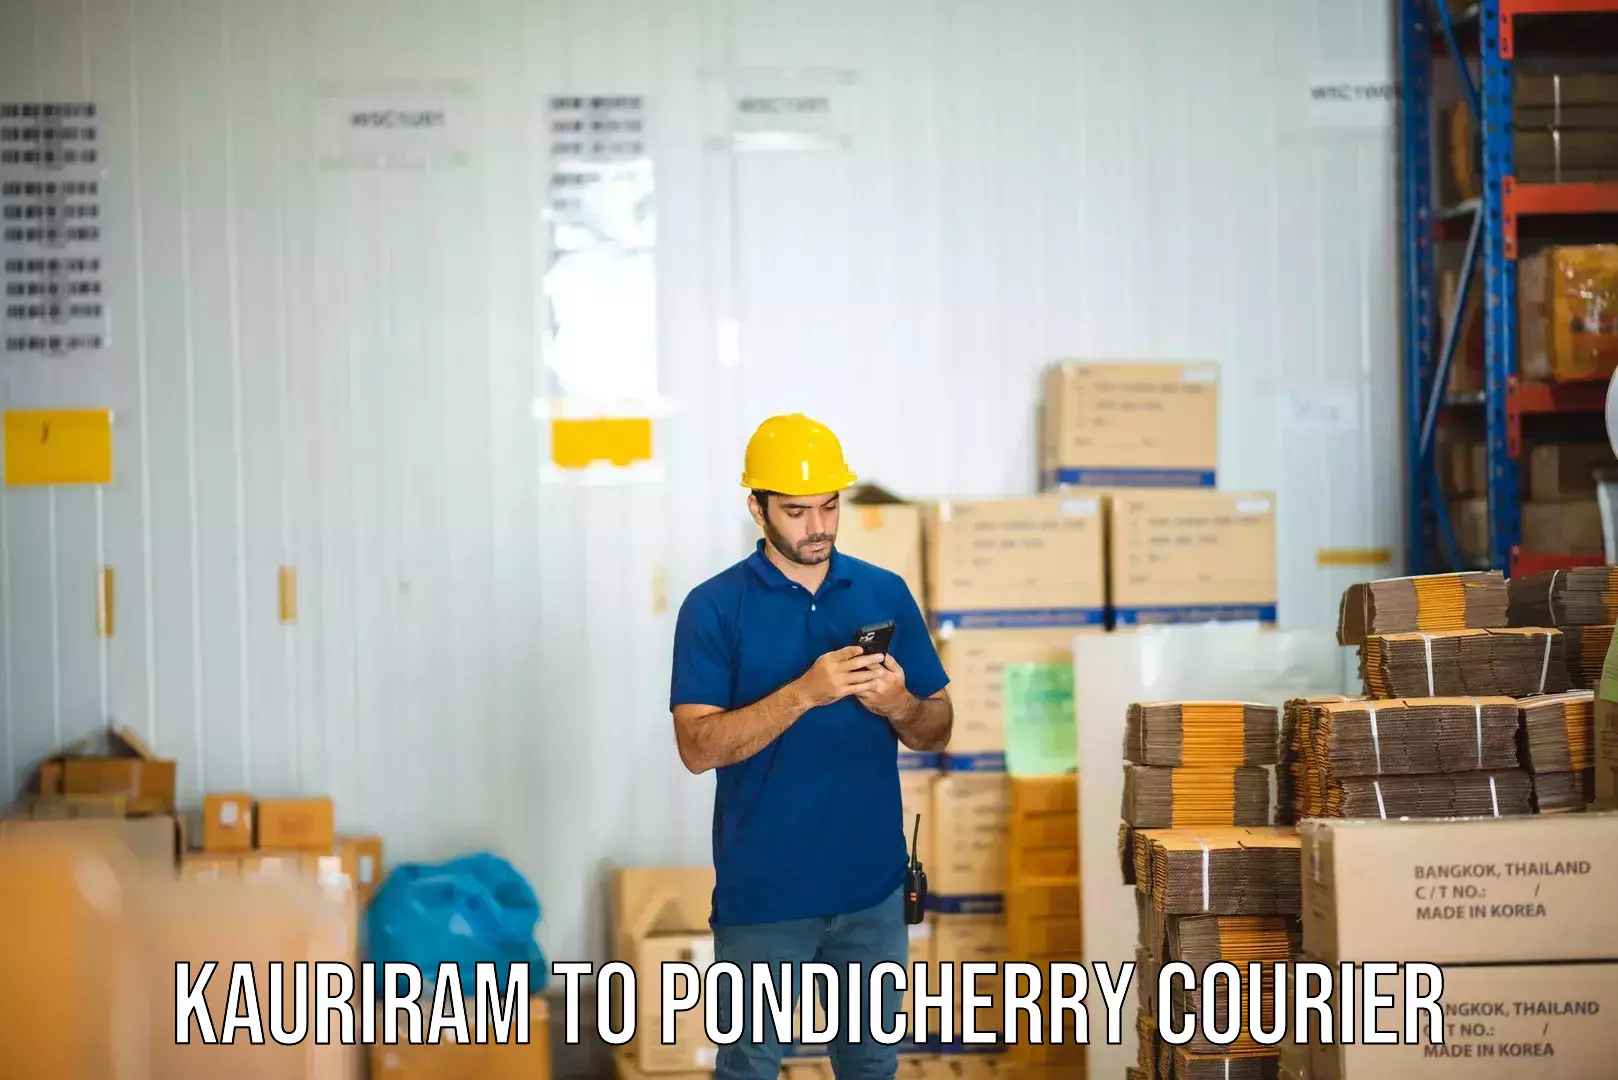 Courier service innovation Kauriram to Pondicherry